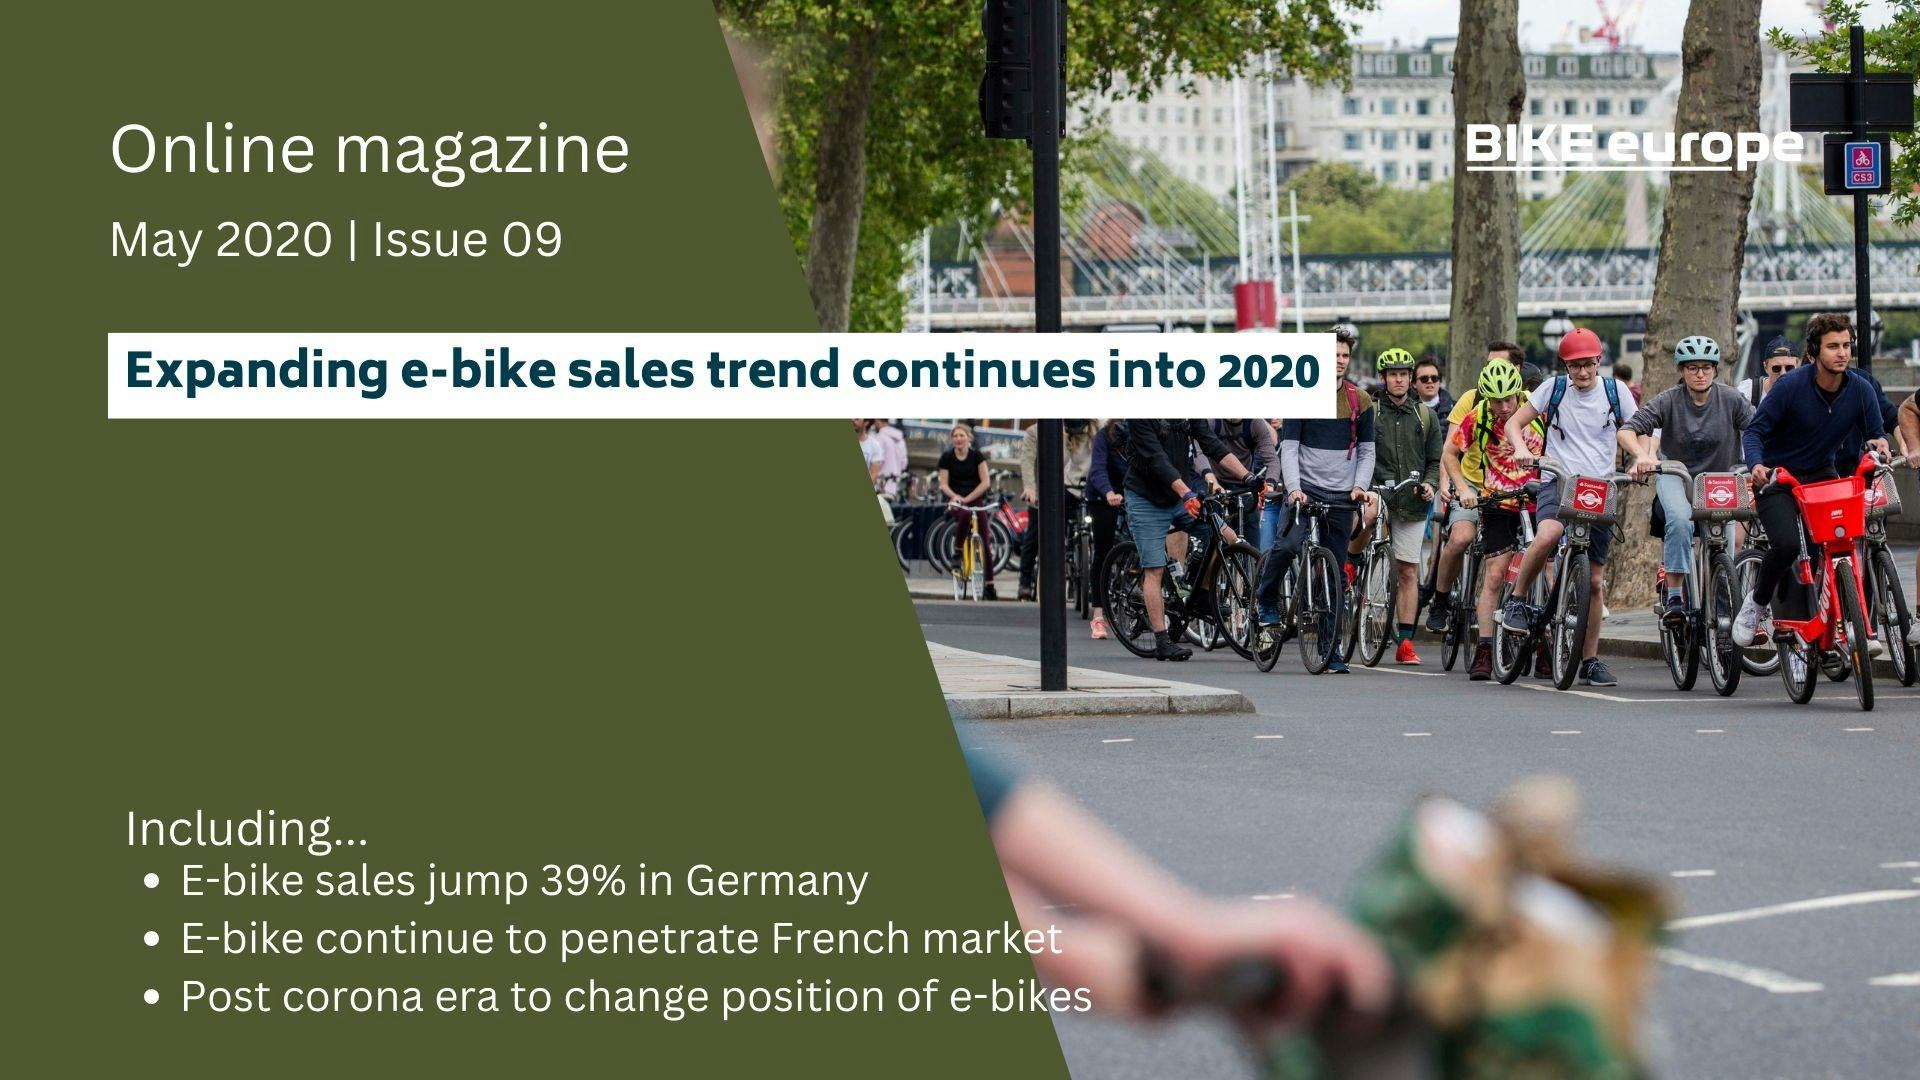 Online magazine: Expanding e-bike sales trend continues into 2020